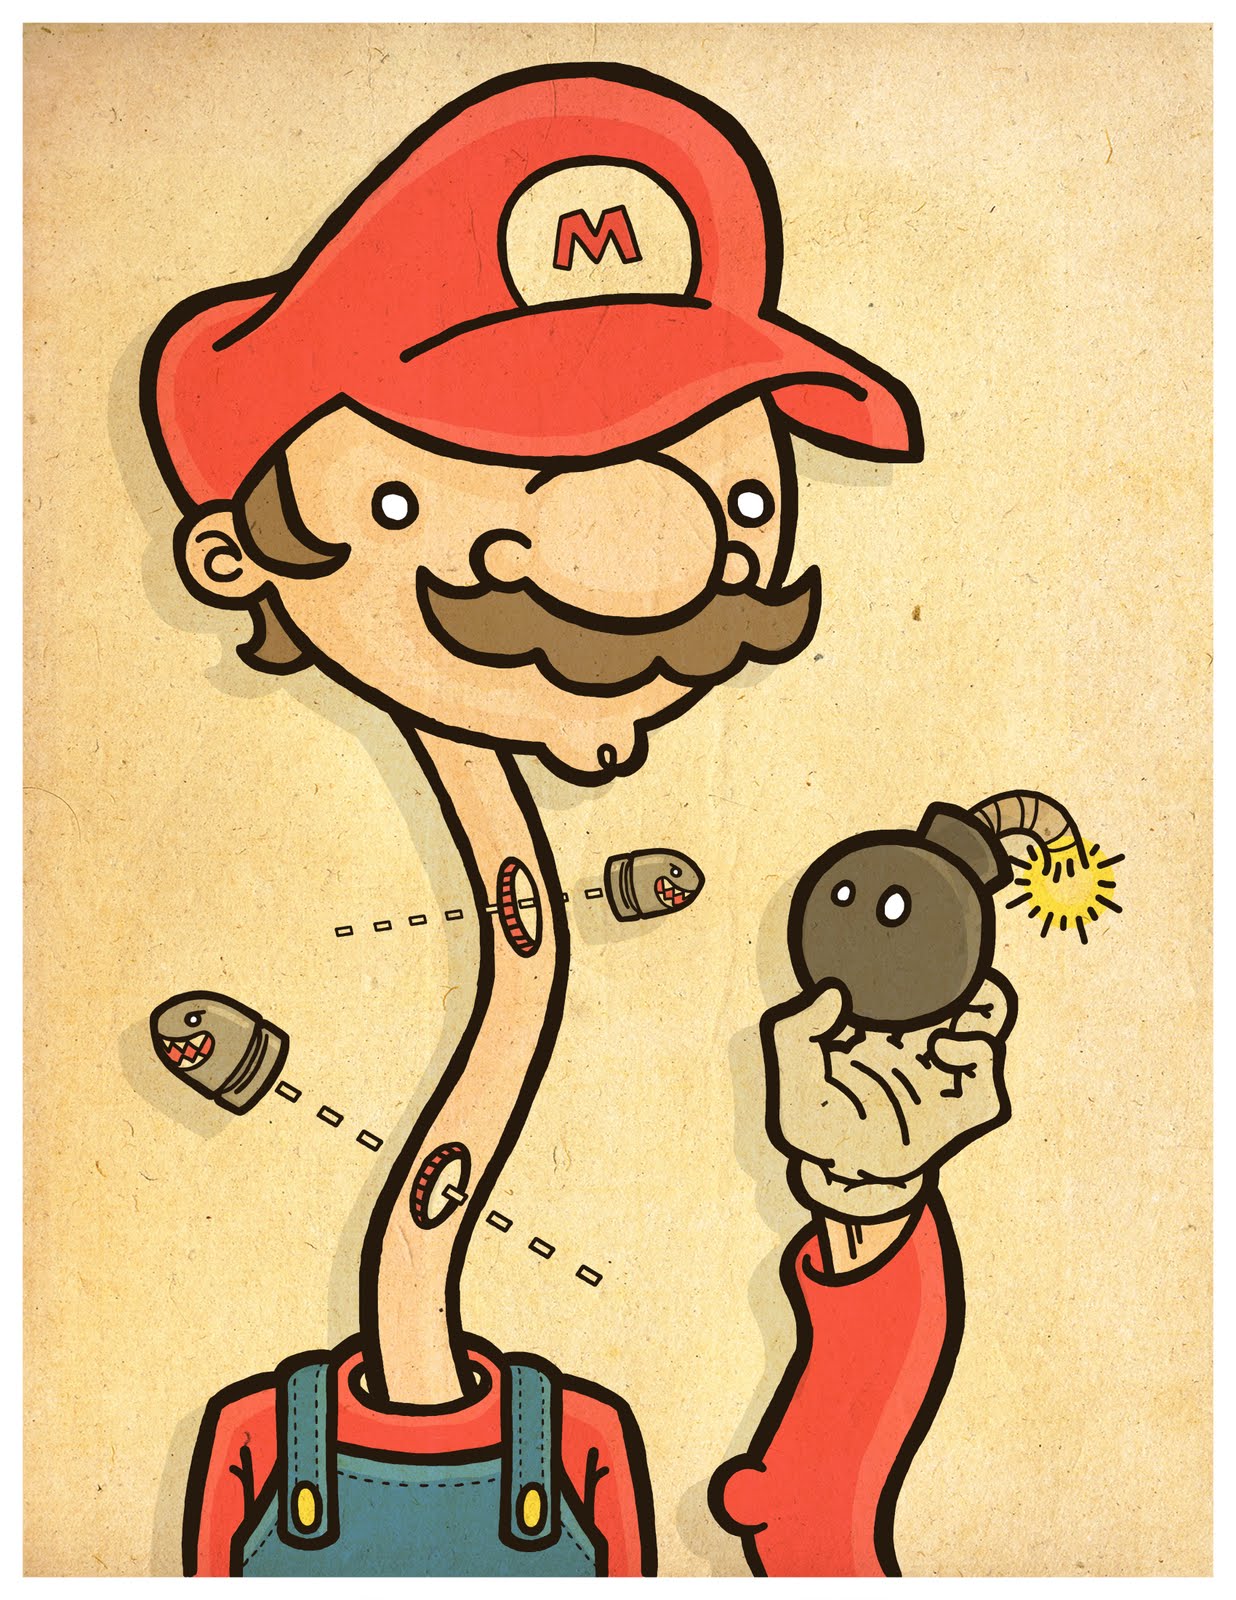 Odd Creations: Super Mario And Link In The Same Predicament